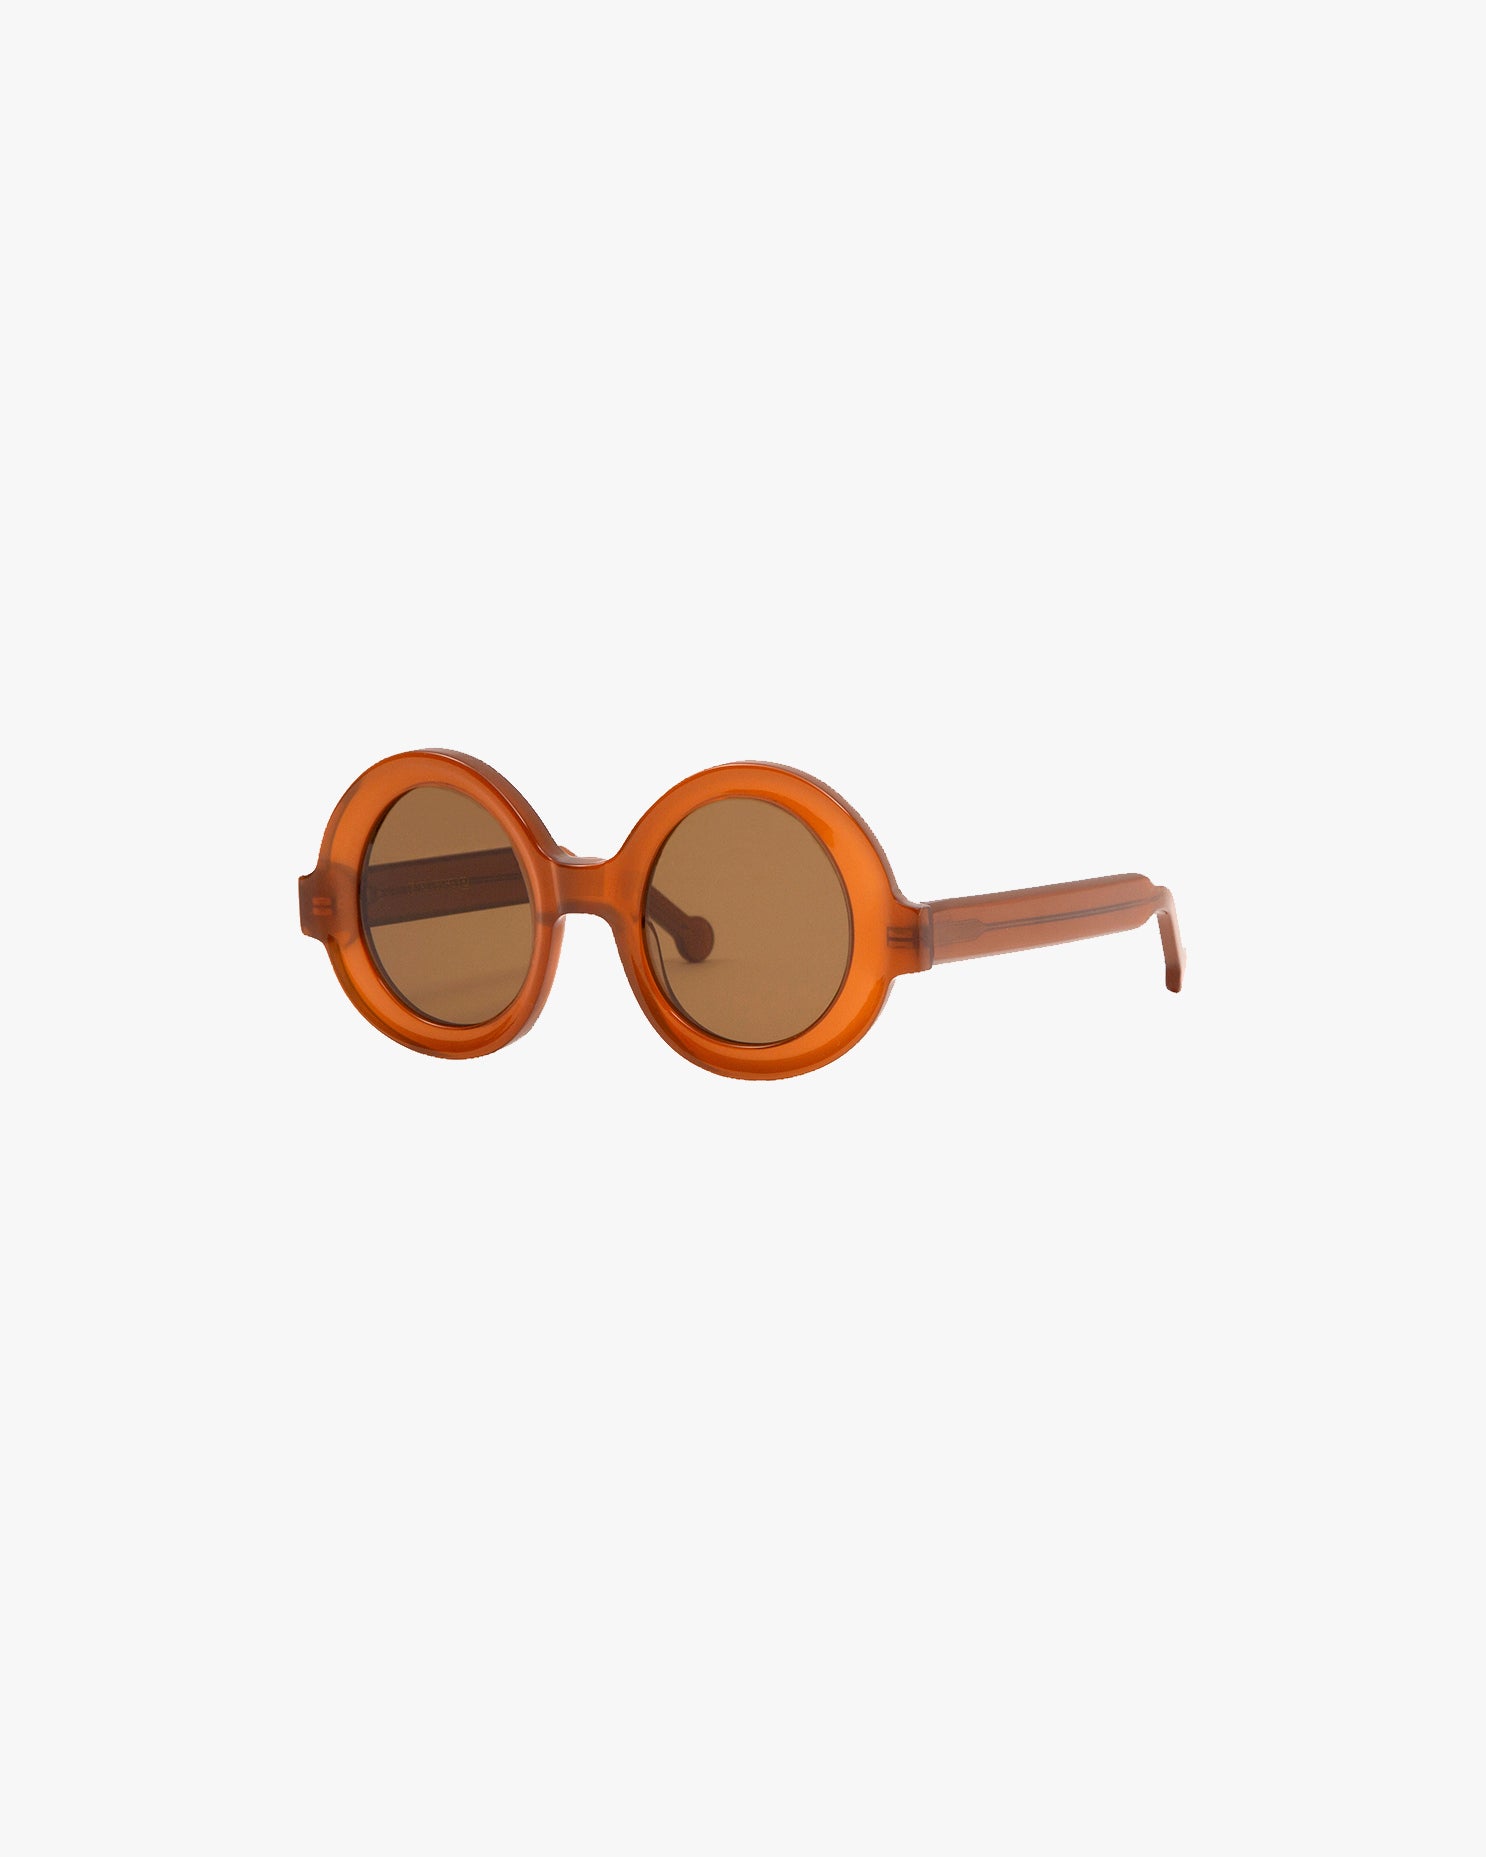 Unoval Sunglasses in Brown